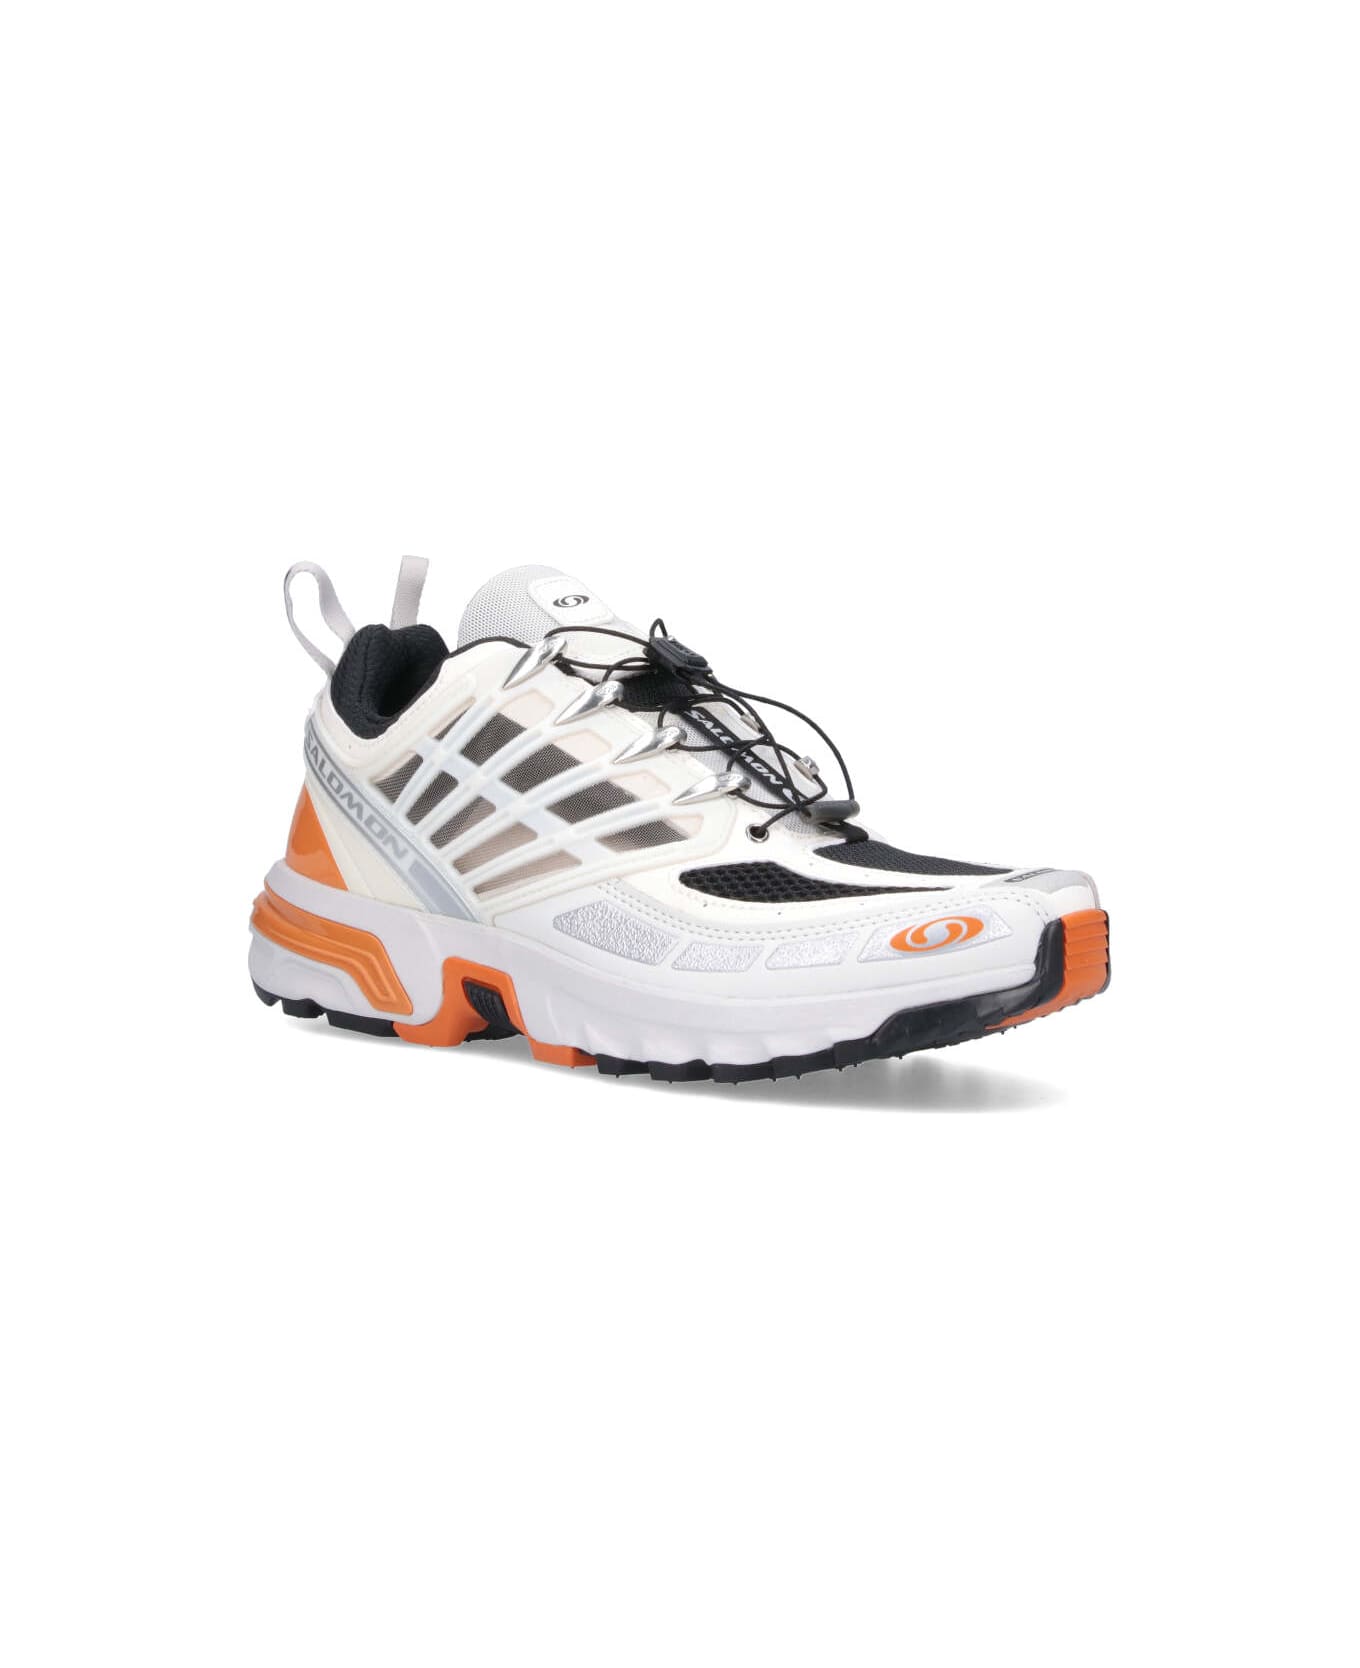 Salomon Sneakers "acs Pro Vanilla Ice Lunar Rock Tomato" - White スニーカー